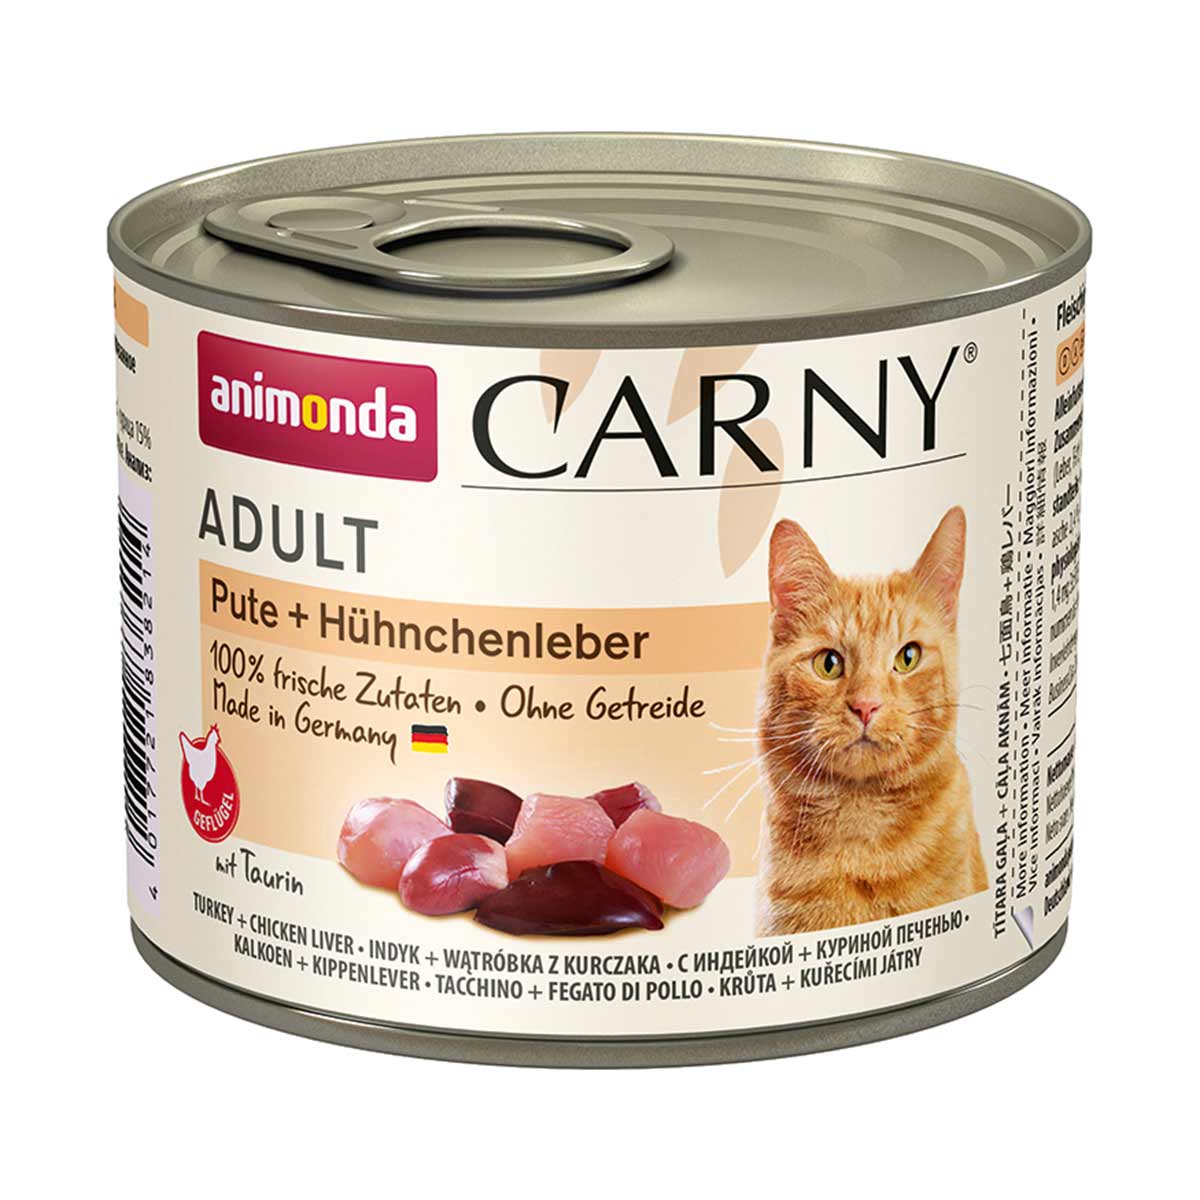 animonda Carny Adult Pute + Hühnchenleber 24x200g